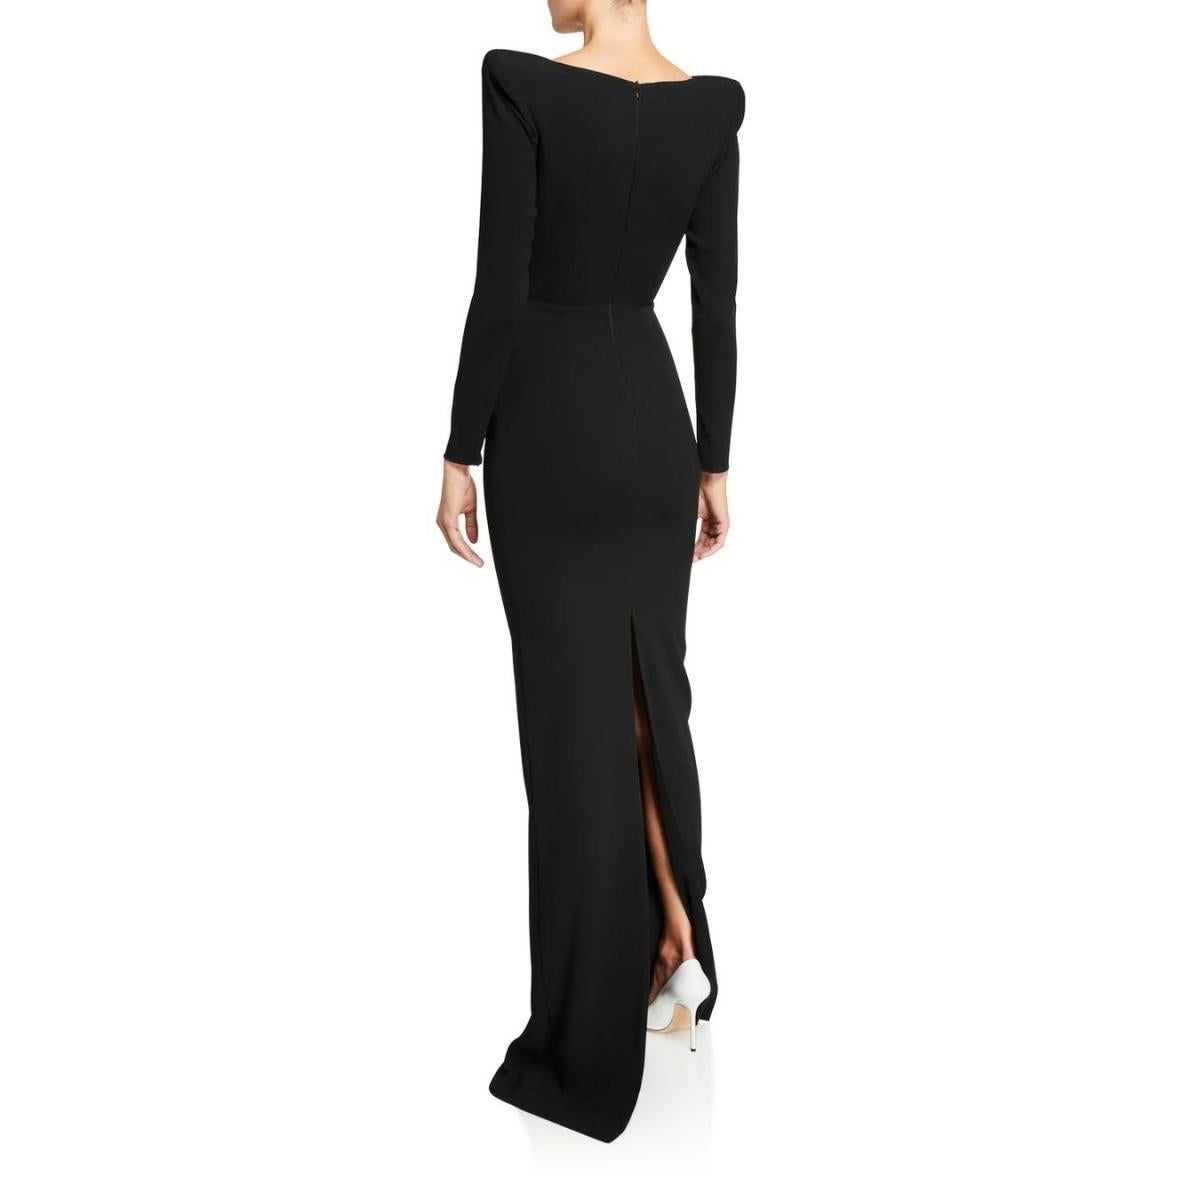 Black Alex Perry Long-Sleeve Column Gown sz AU 14 US10